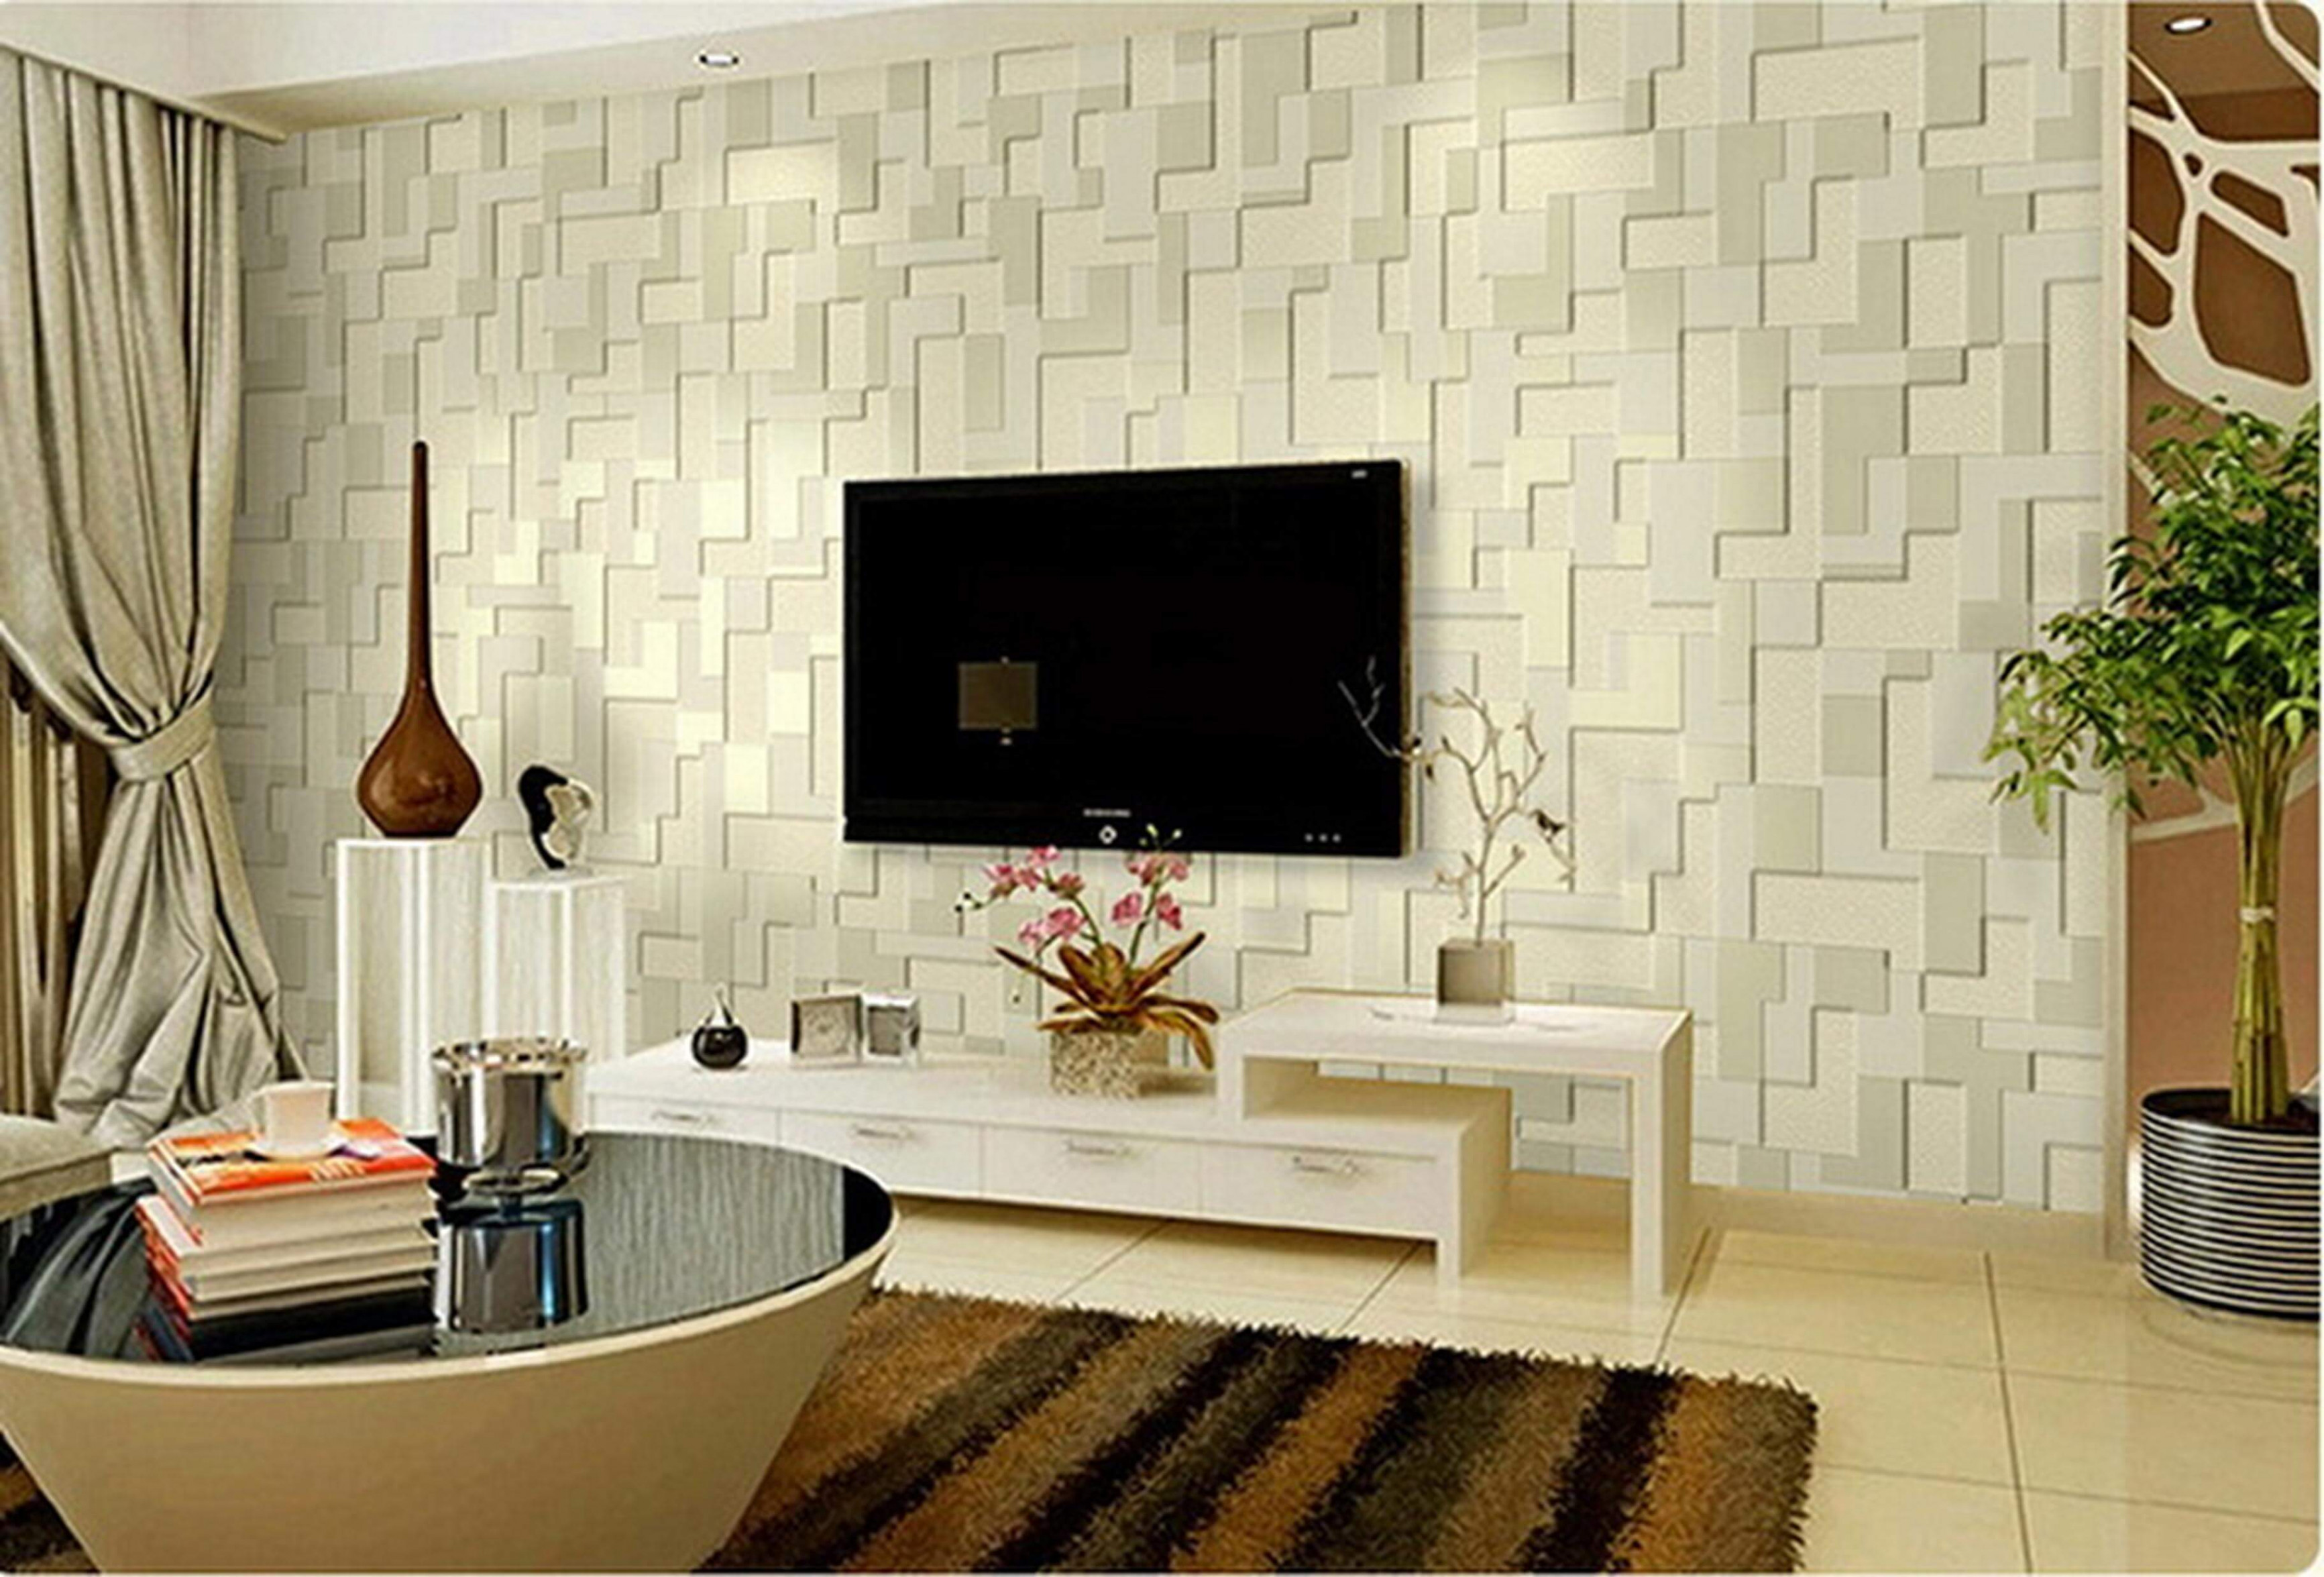 3d wallpaper designs for living room,room,living room,interior design,wall,property